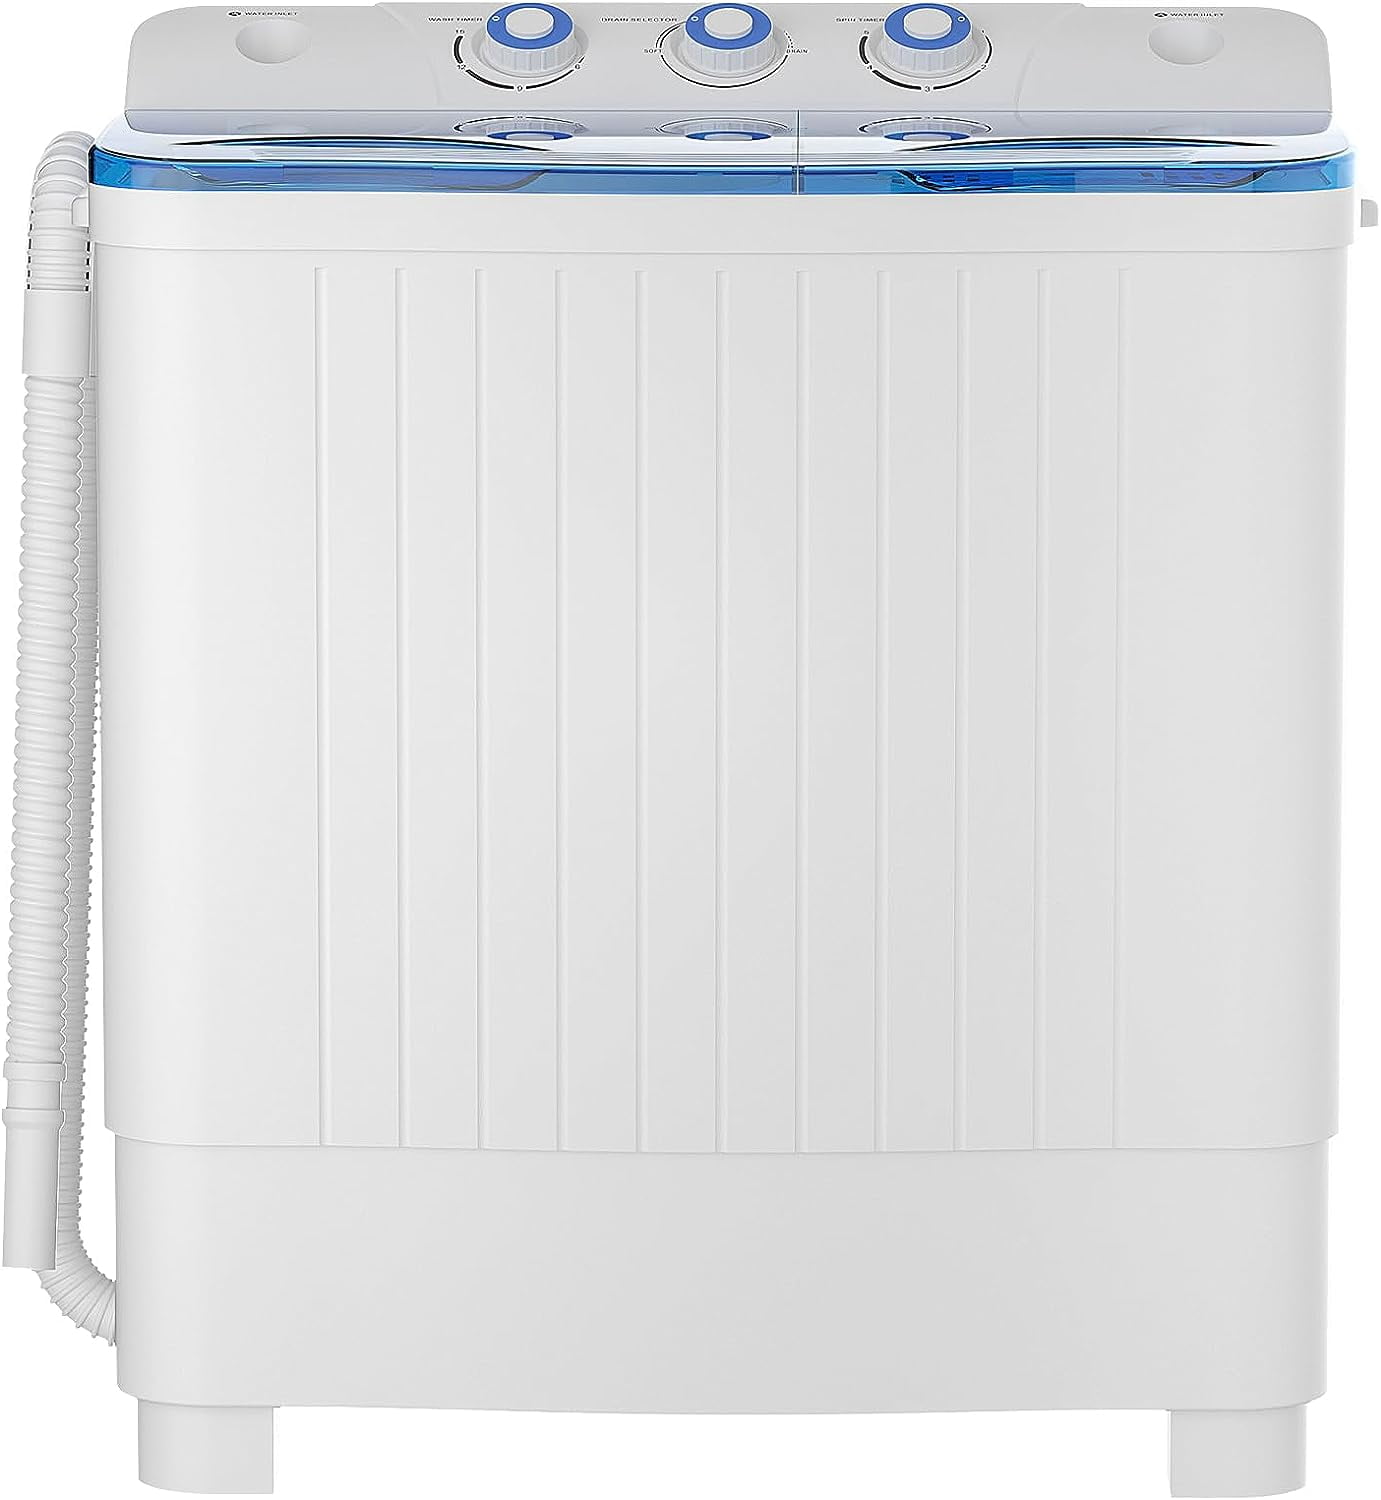 Auertech Portable Washing Machine - appliances - by owner - sale -  craigslist